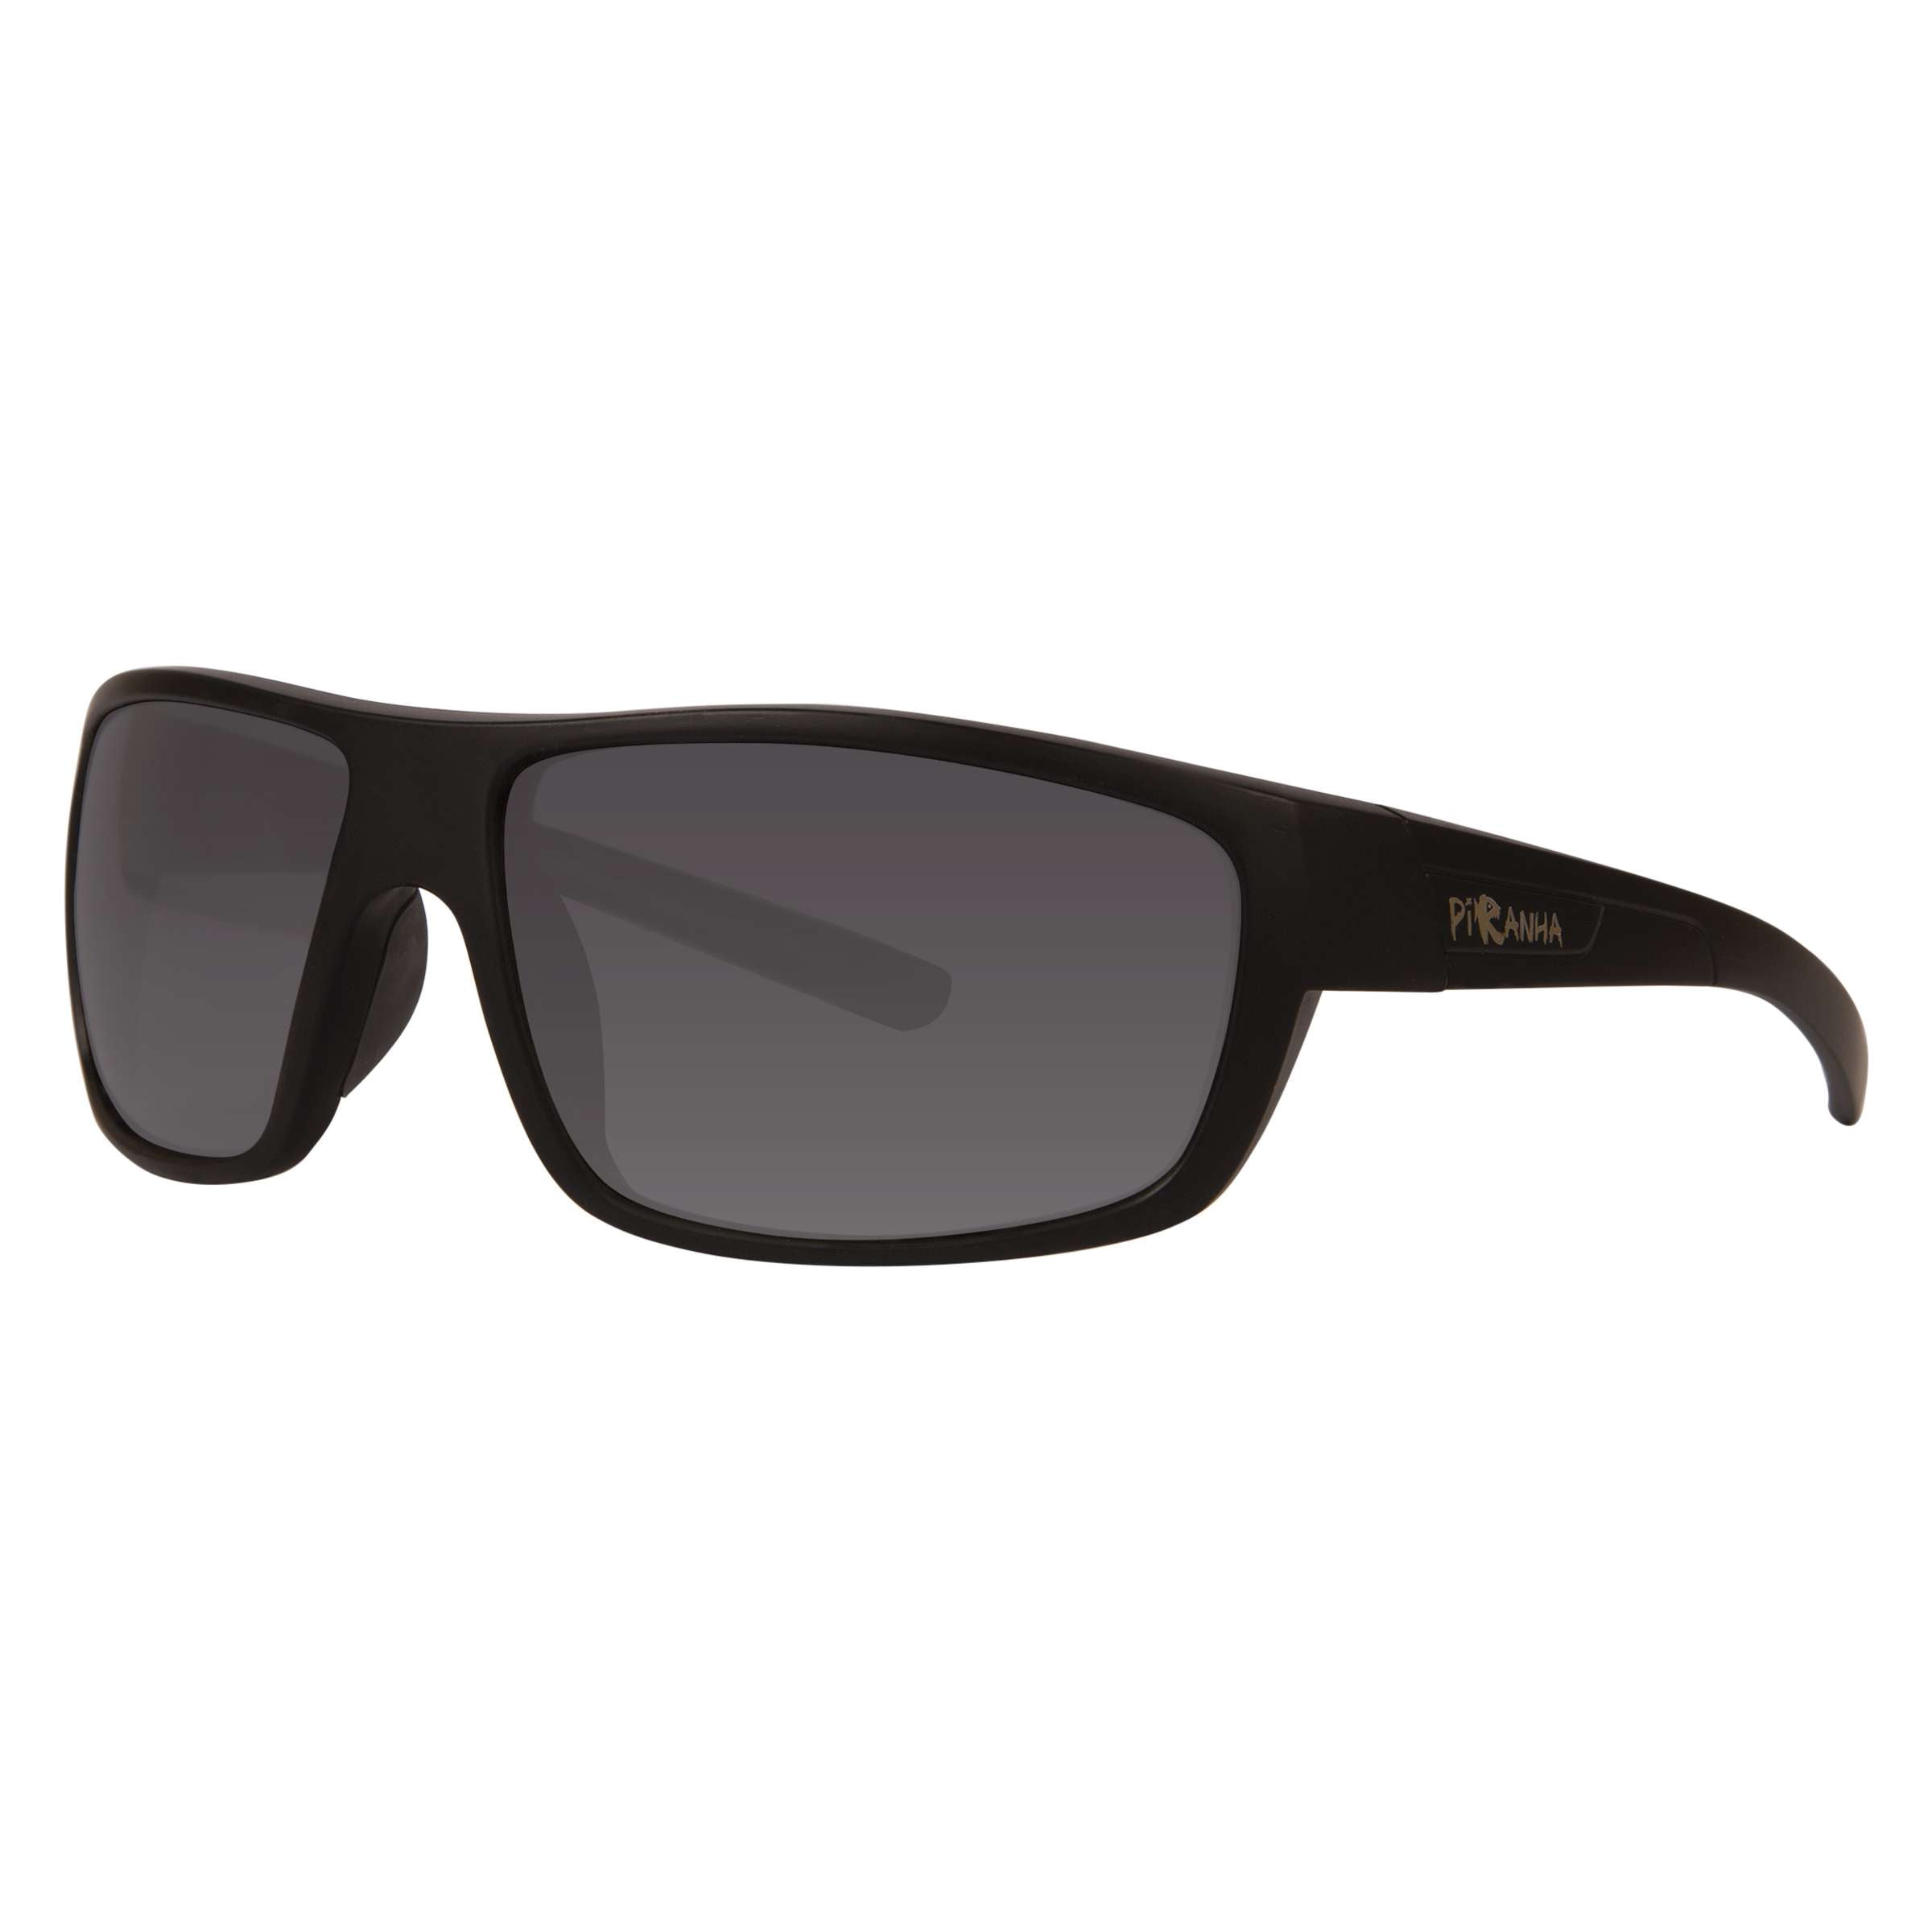 Piranha Eyewear Peak Rubber Finished Black Sports Sunglasses with Smoke Lens